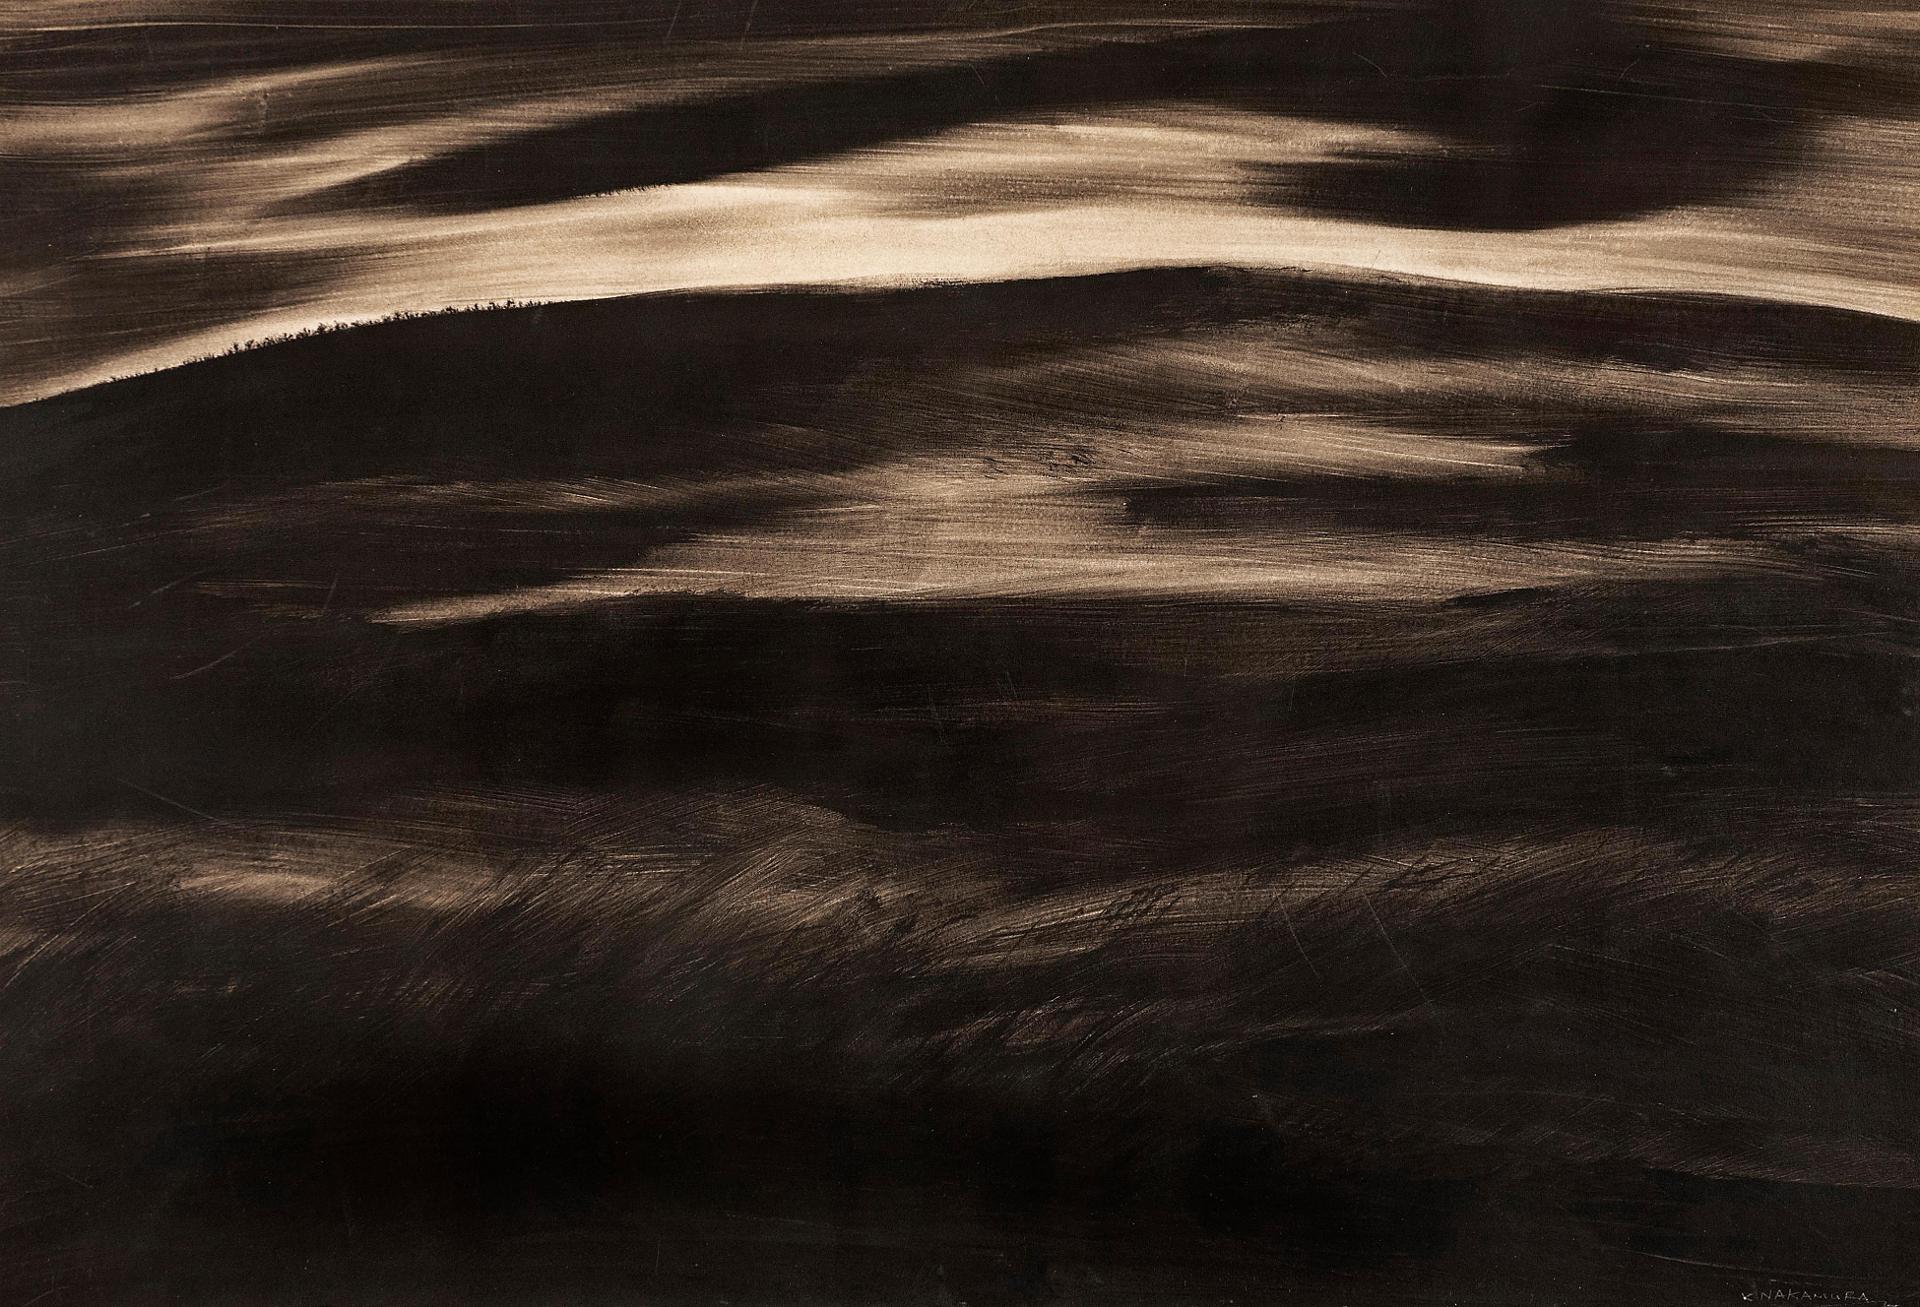 Kazuo Nakamura (1926-2002) - An Evening Landscape